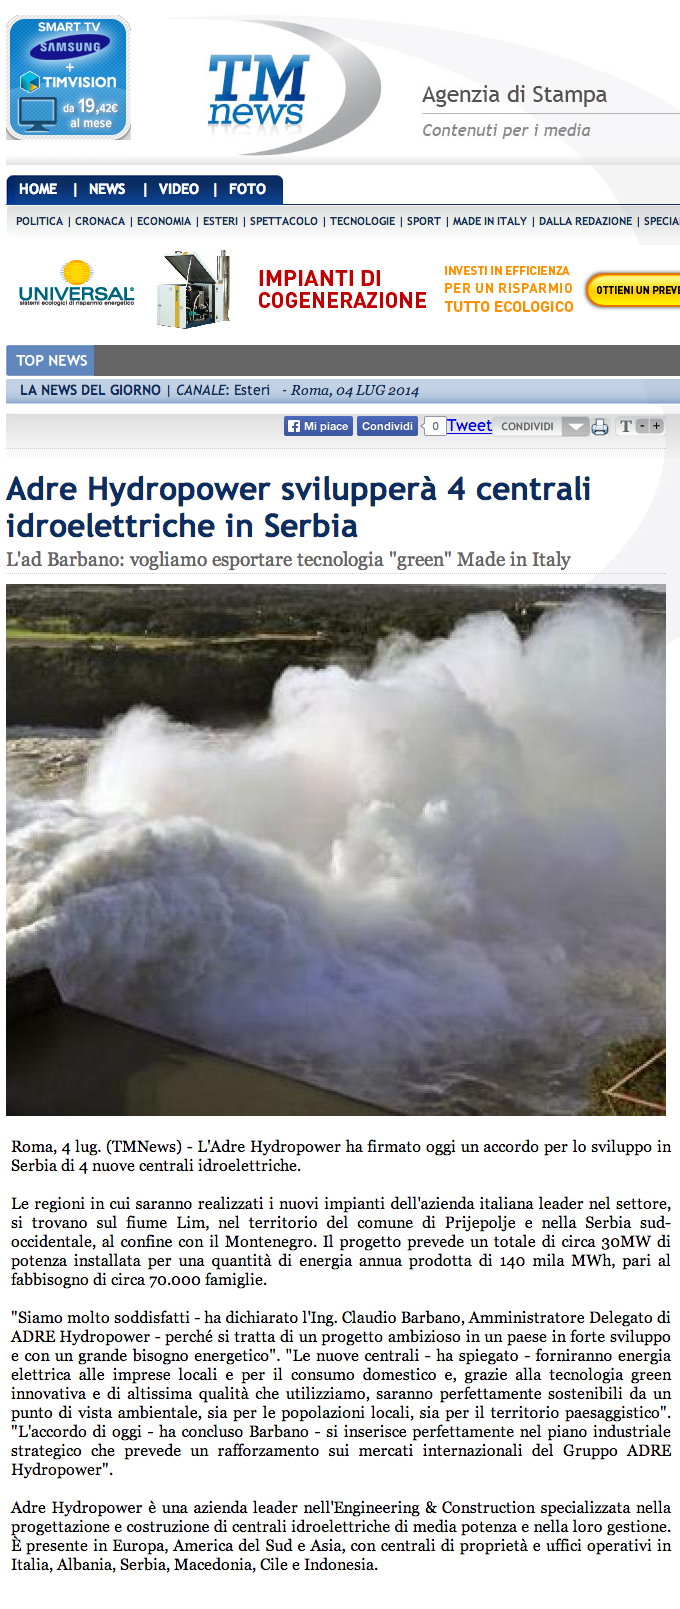 Adre Hydropower svilupperà 4 centrali idroelettriche in Serbia